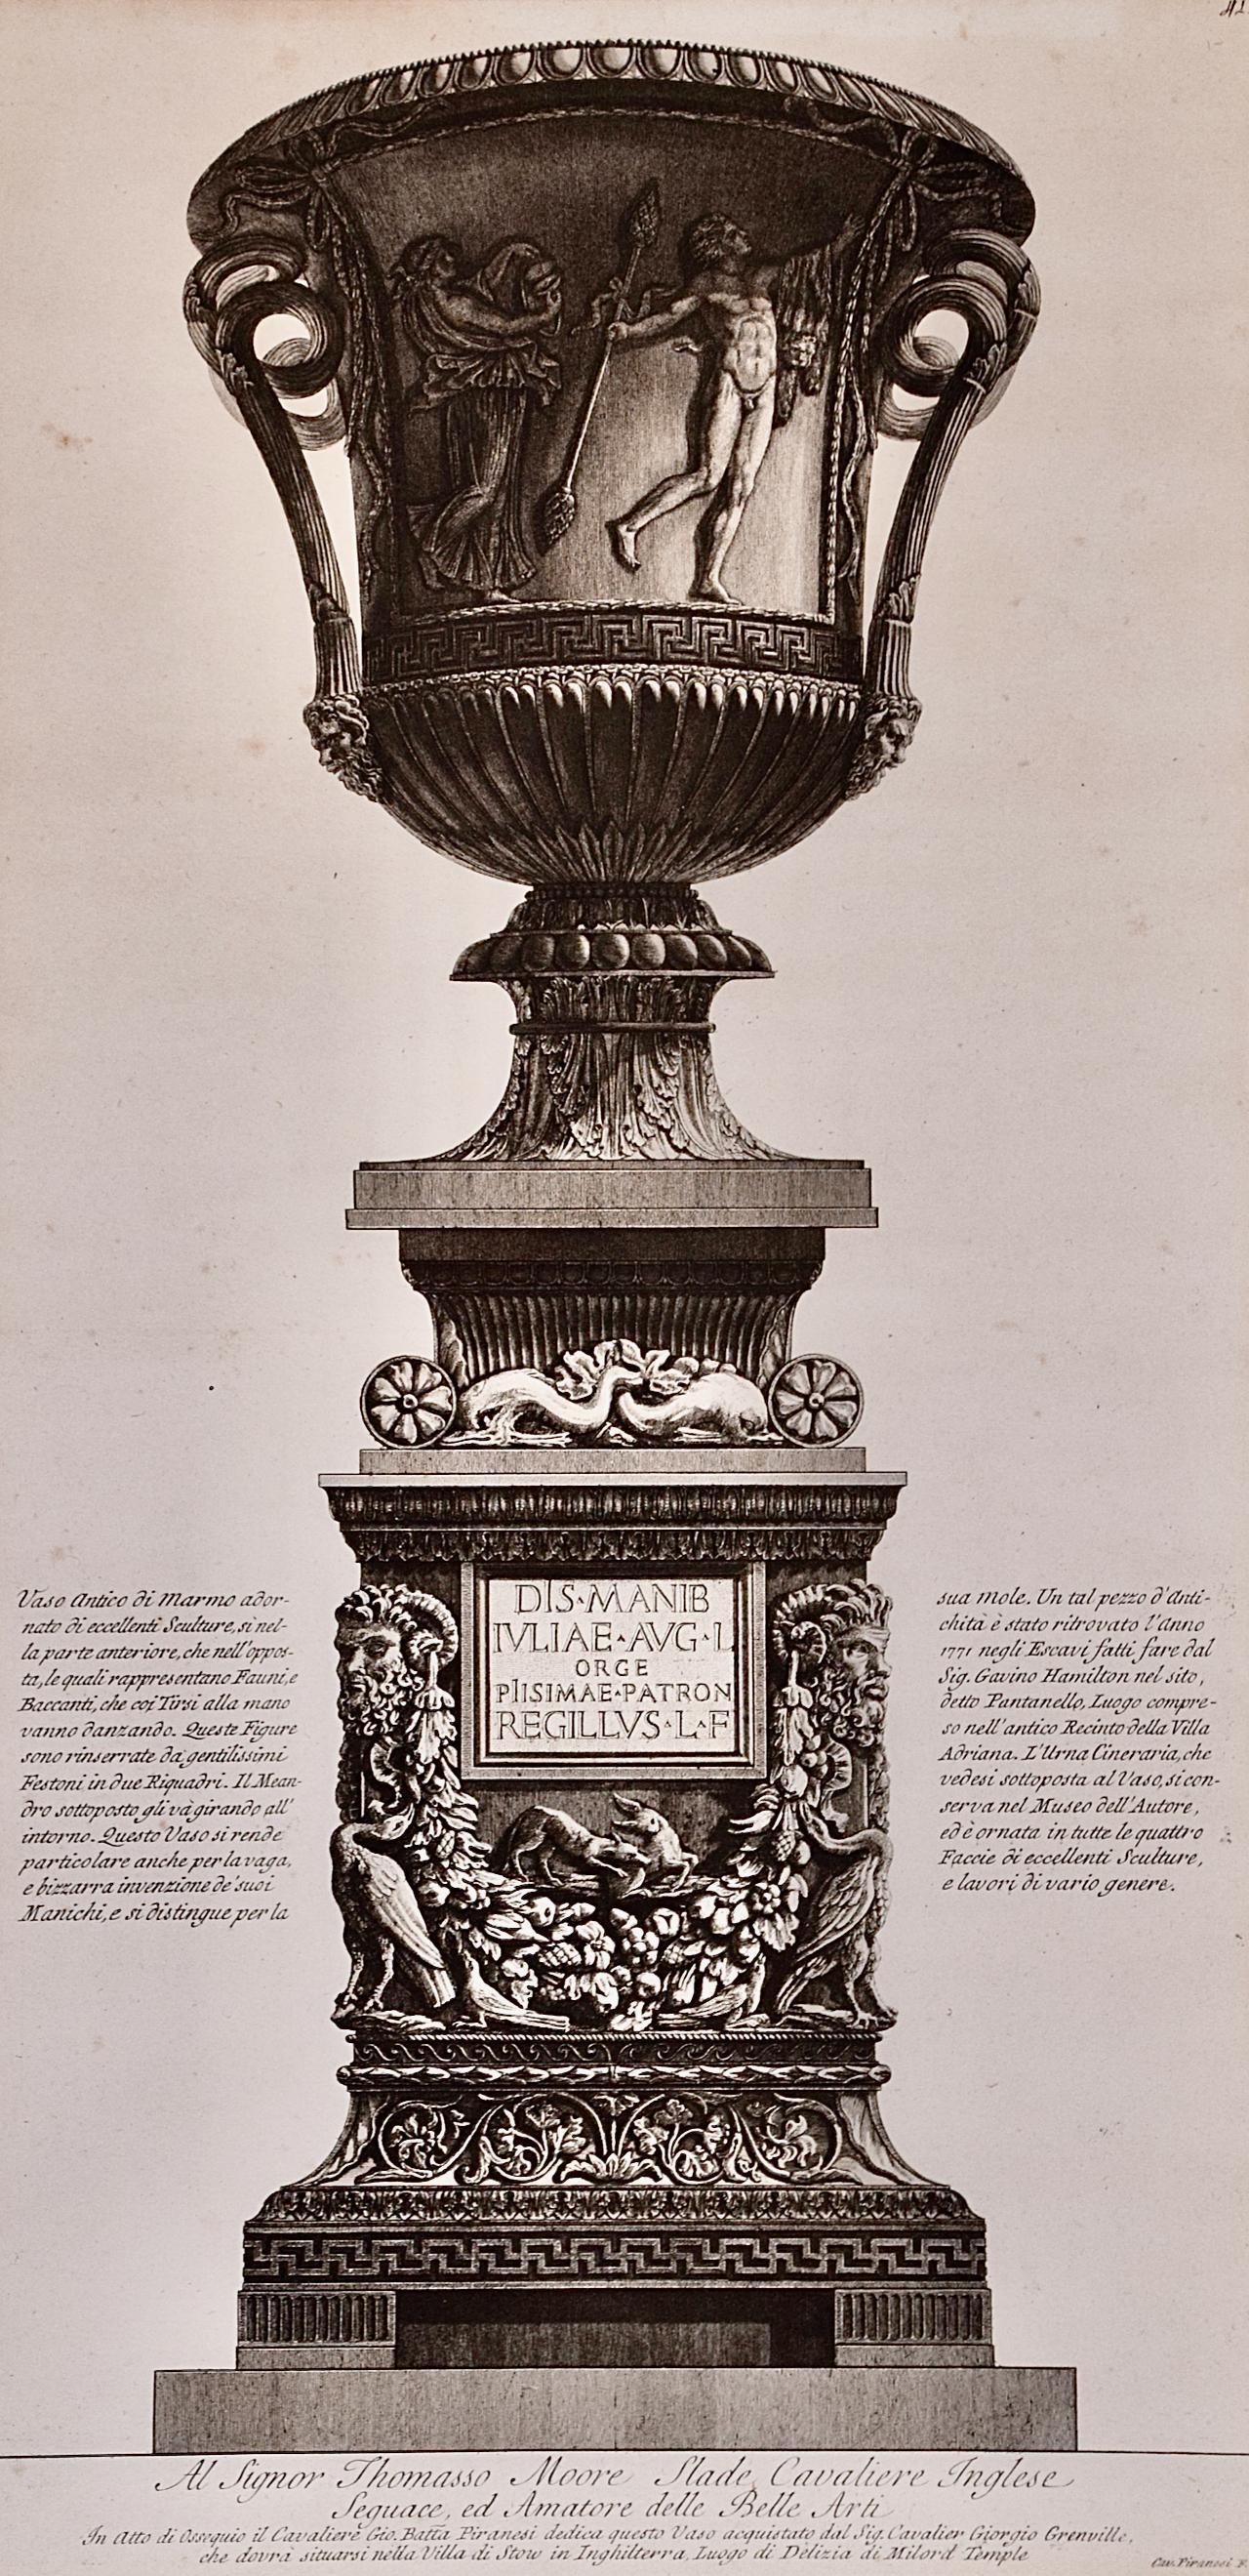 A.I.C. Piranesi encadrée, gravure à l'eau-forte d'un vase ancien en marbre provenant de la VILLA d'Hadrien - Print de Giovanni Battista Piranesi